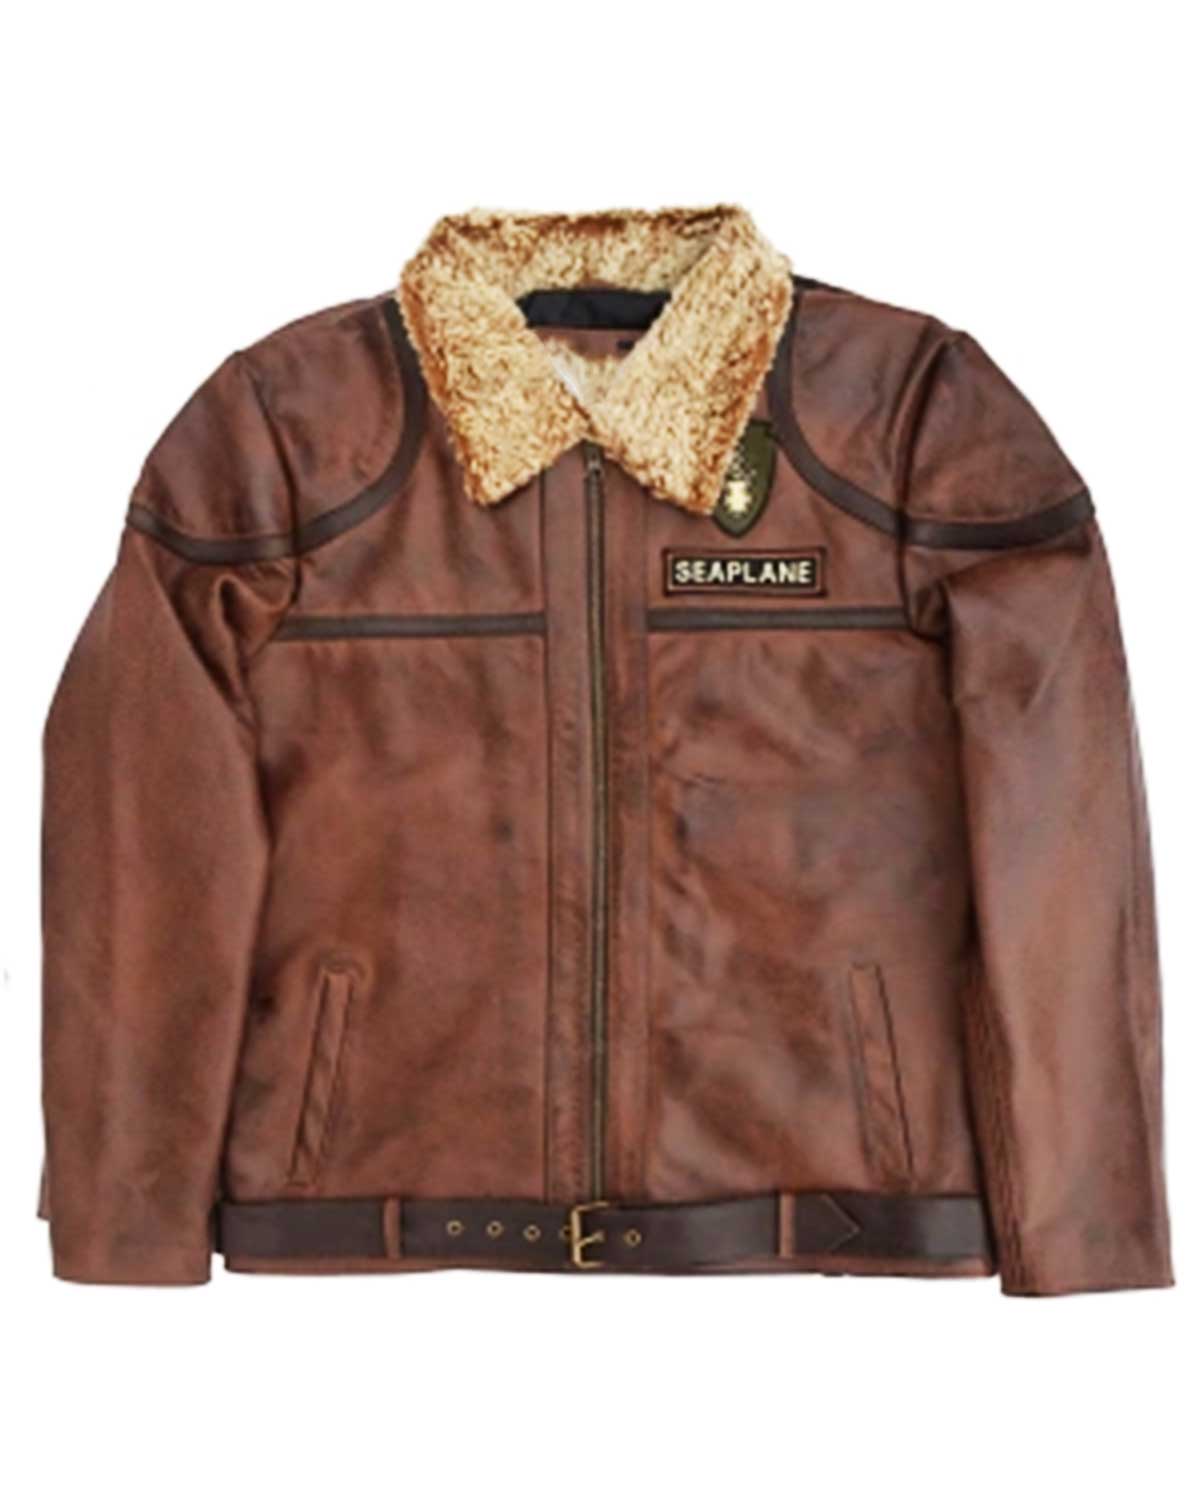 Jumanji Seaplane Nick Jonas Leather Jacket | Elite Jacket